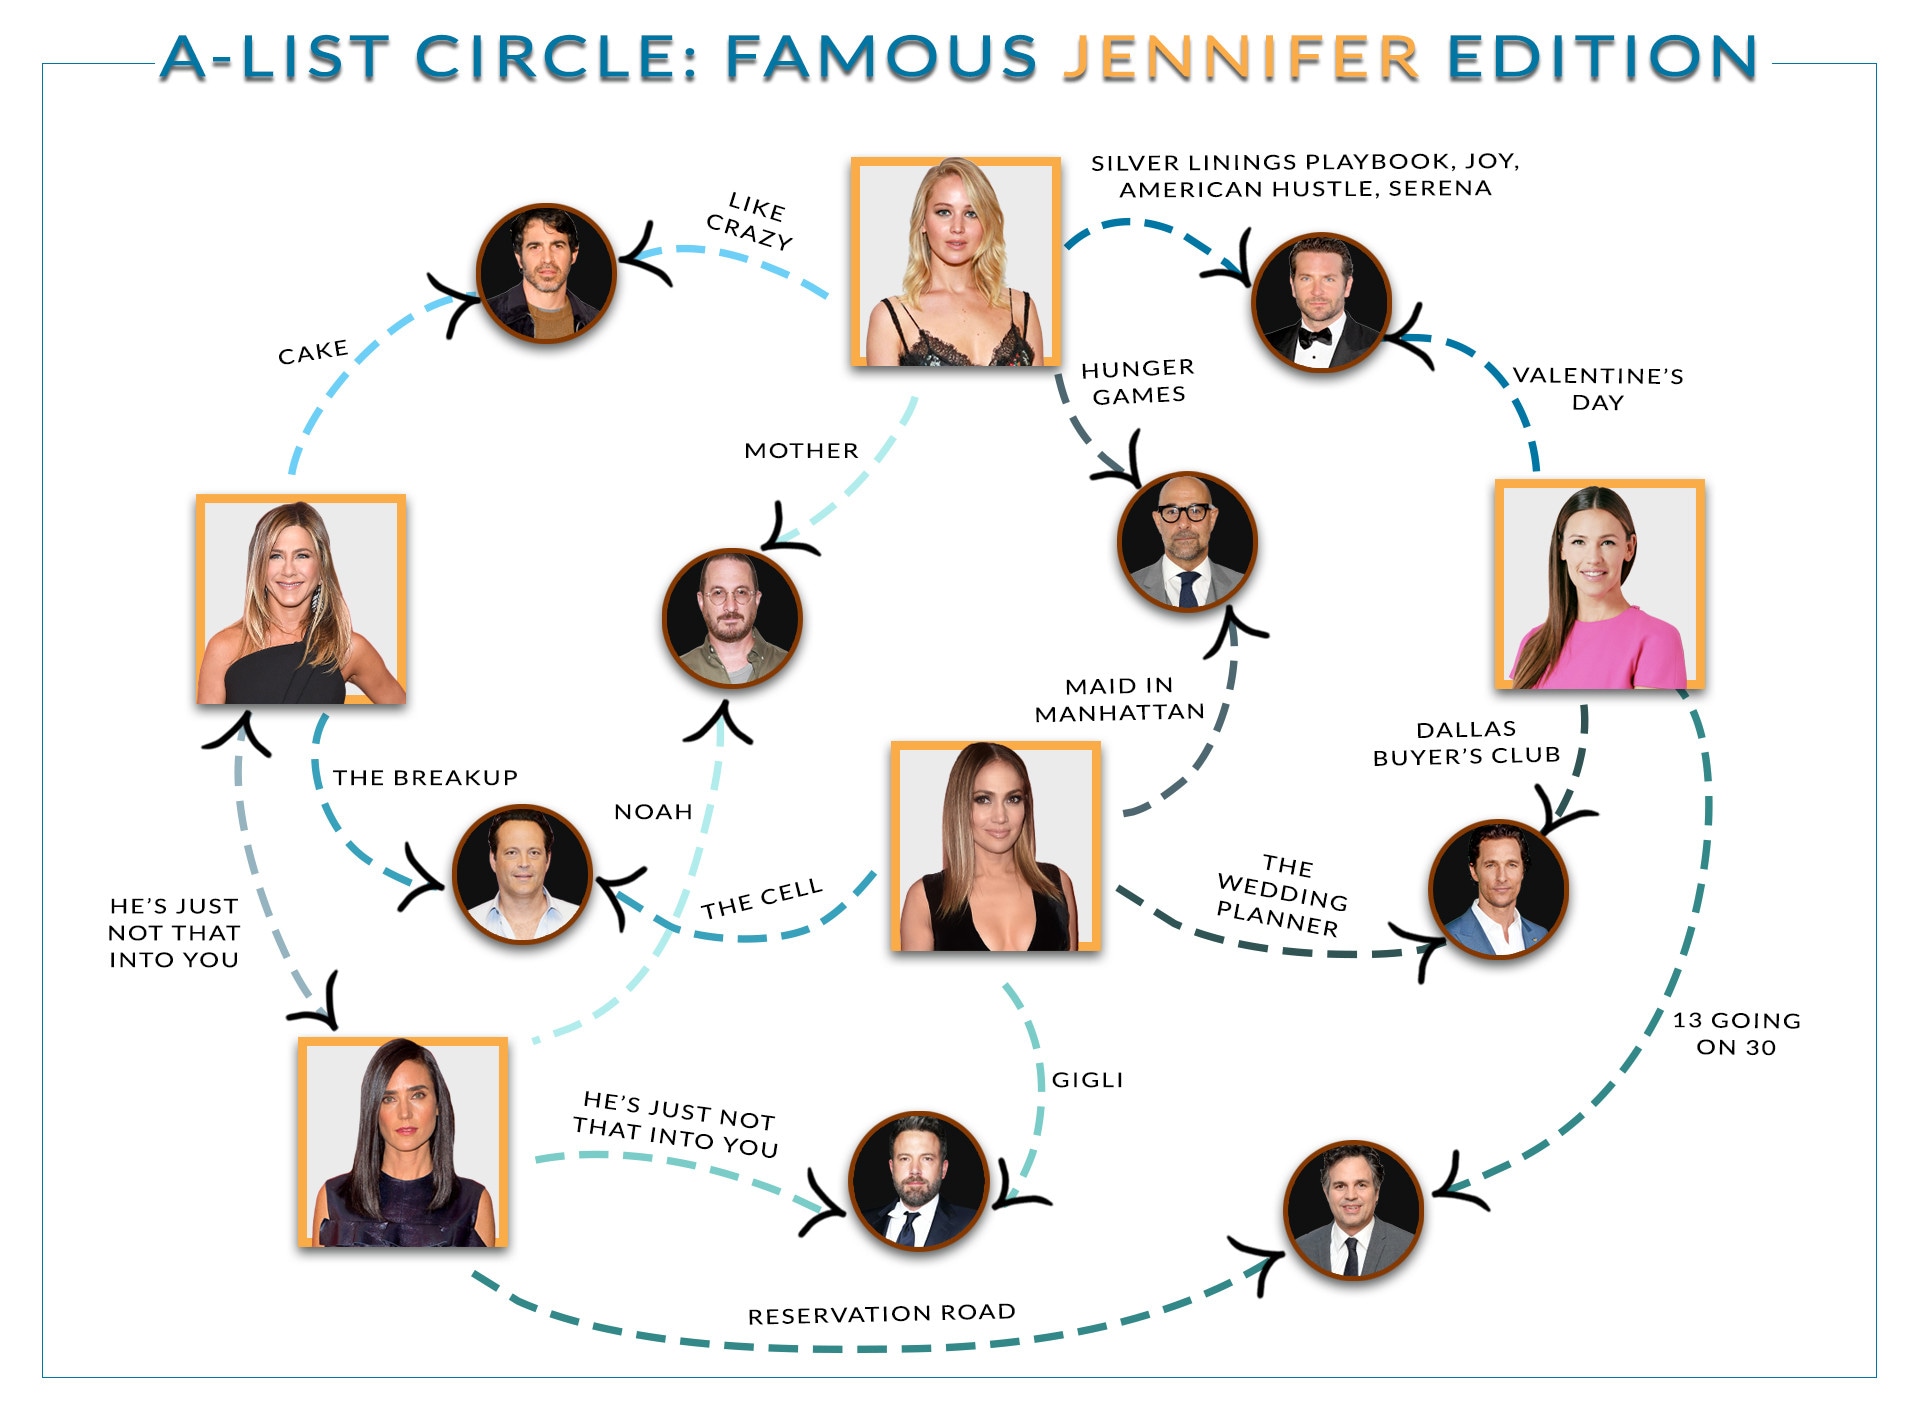 The A-List Circle: Famous Jennifer Edition